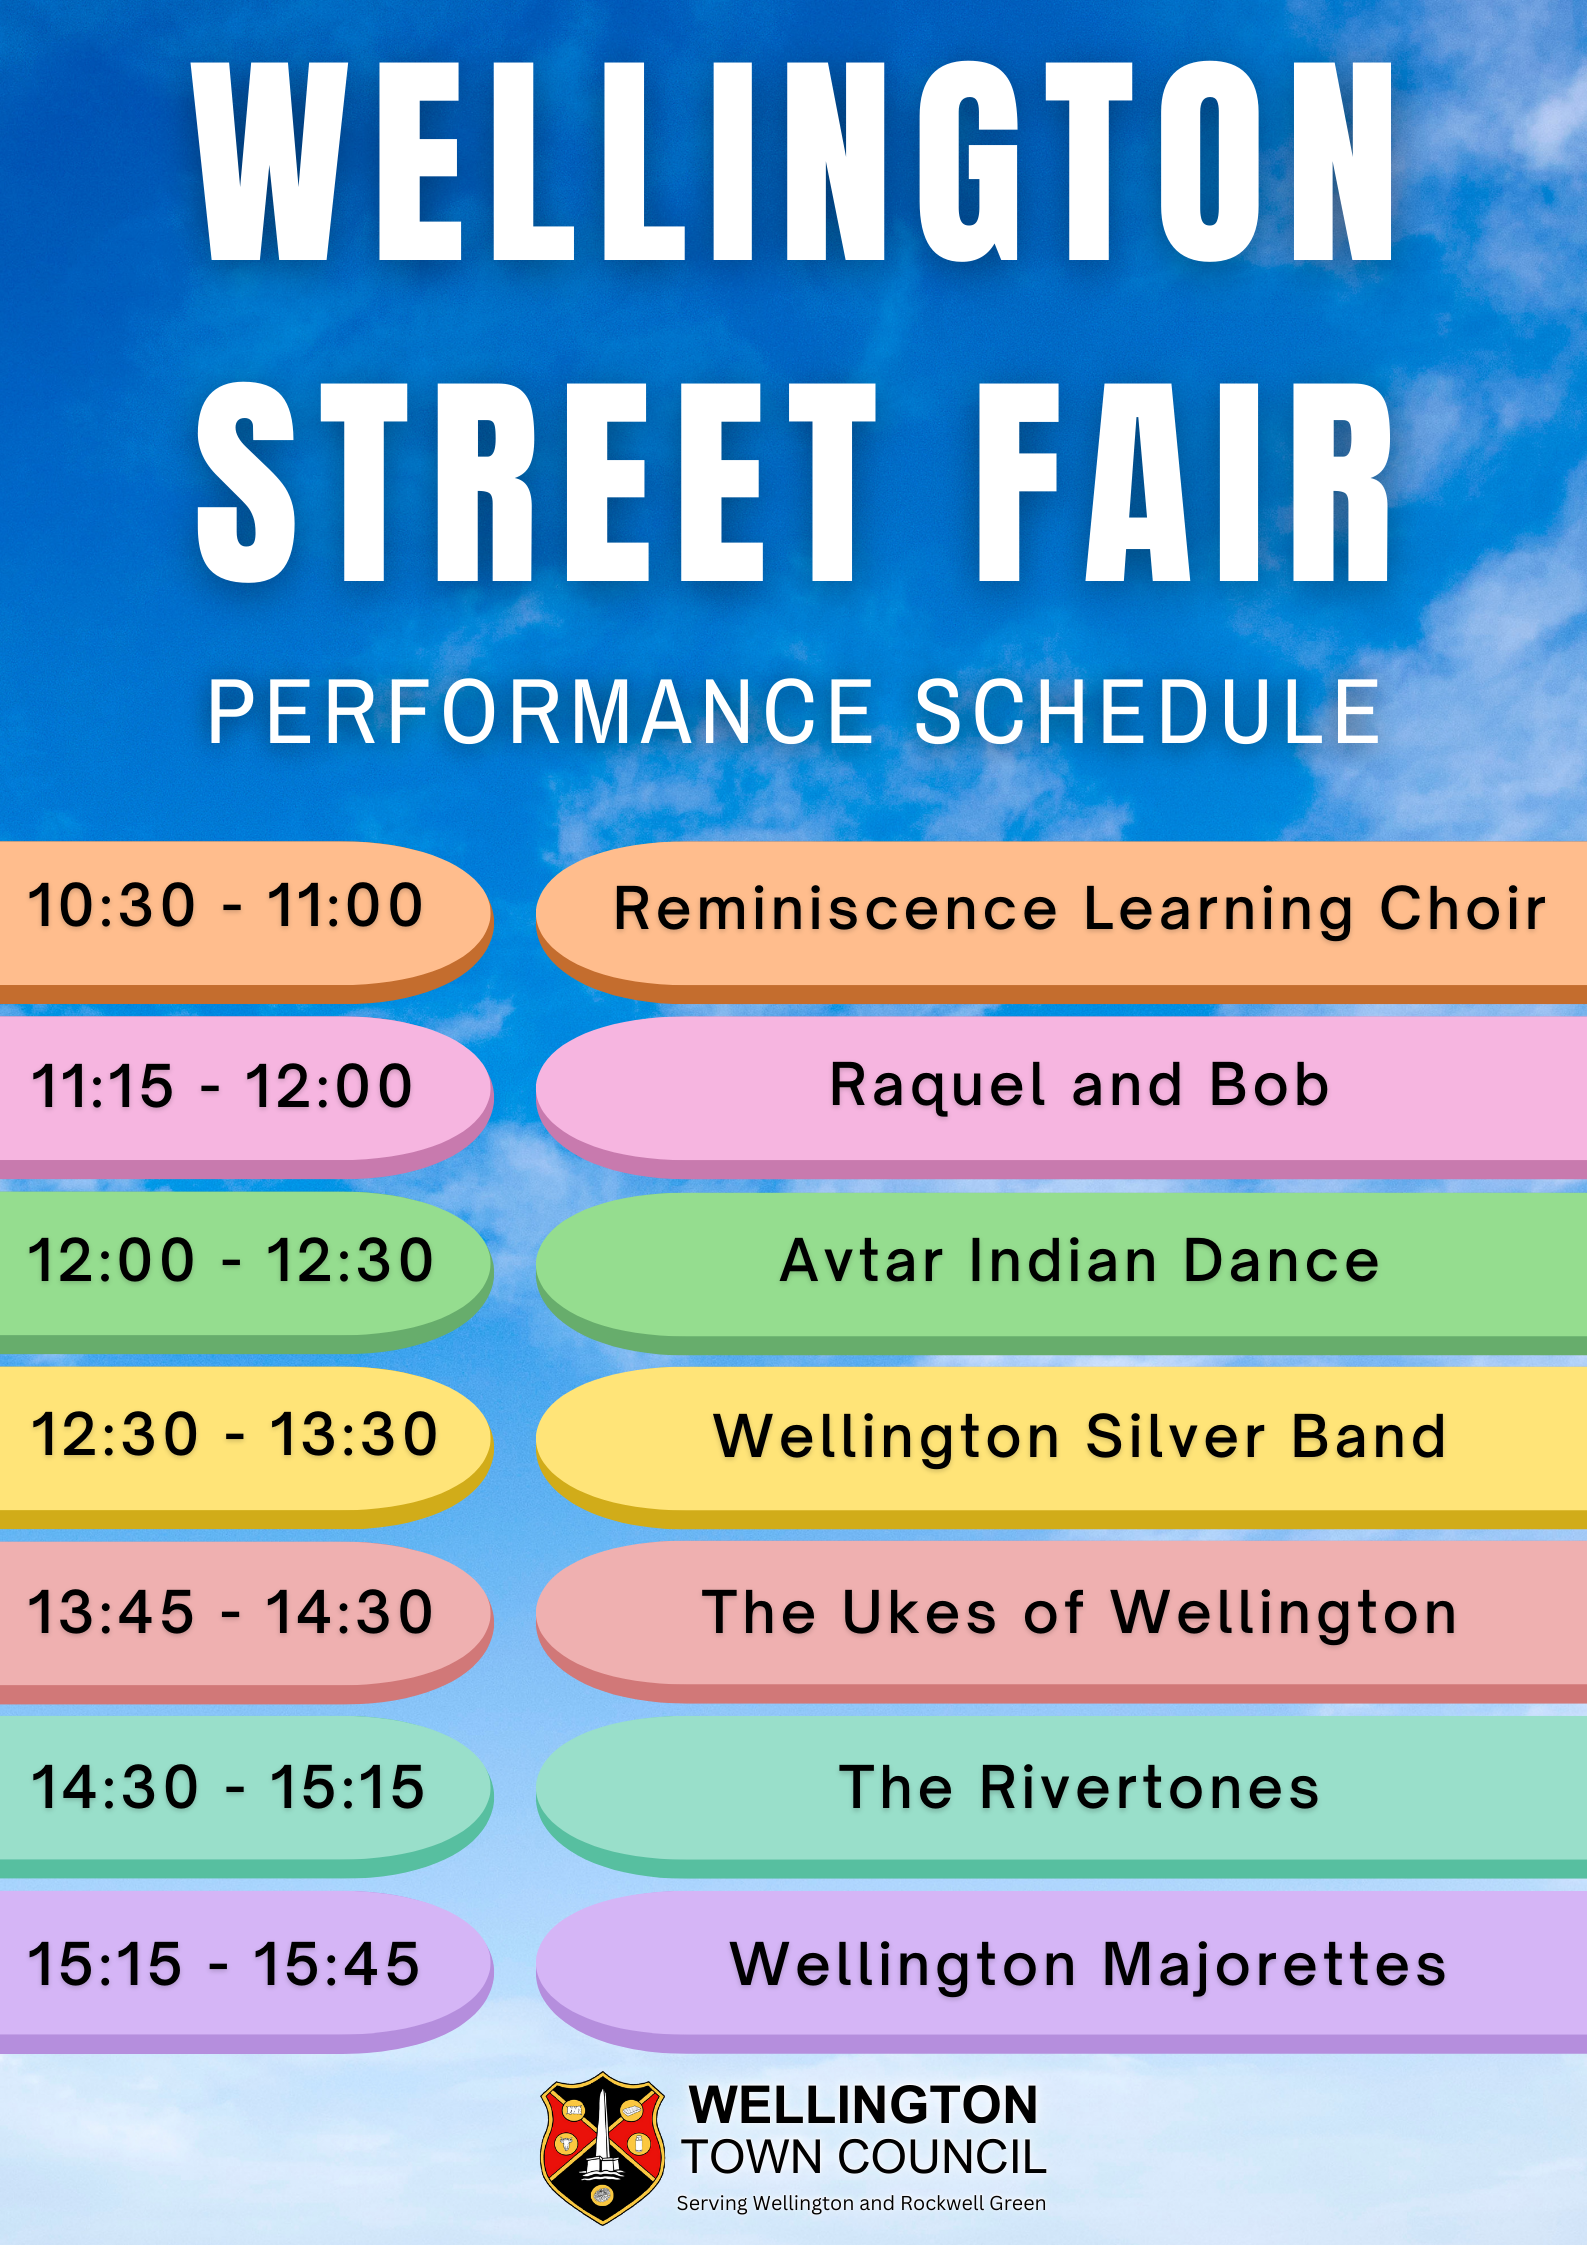 Wellington Street Fair performance schedule 10:30 - 11:00 Reminiscence Learning Choir 11:15 - 12:00 Raquel & Bob 12:00 - 12:30 Avtar Indian Dance 12:30 - 13:30 - Wellington Silver Band 13:45 - 14:30 The Ukes of Wellington 14:30 - 15:15 The Rivertones 15:15 - 15:45 Wellington Majorettes